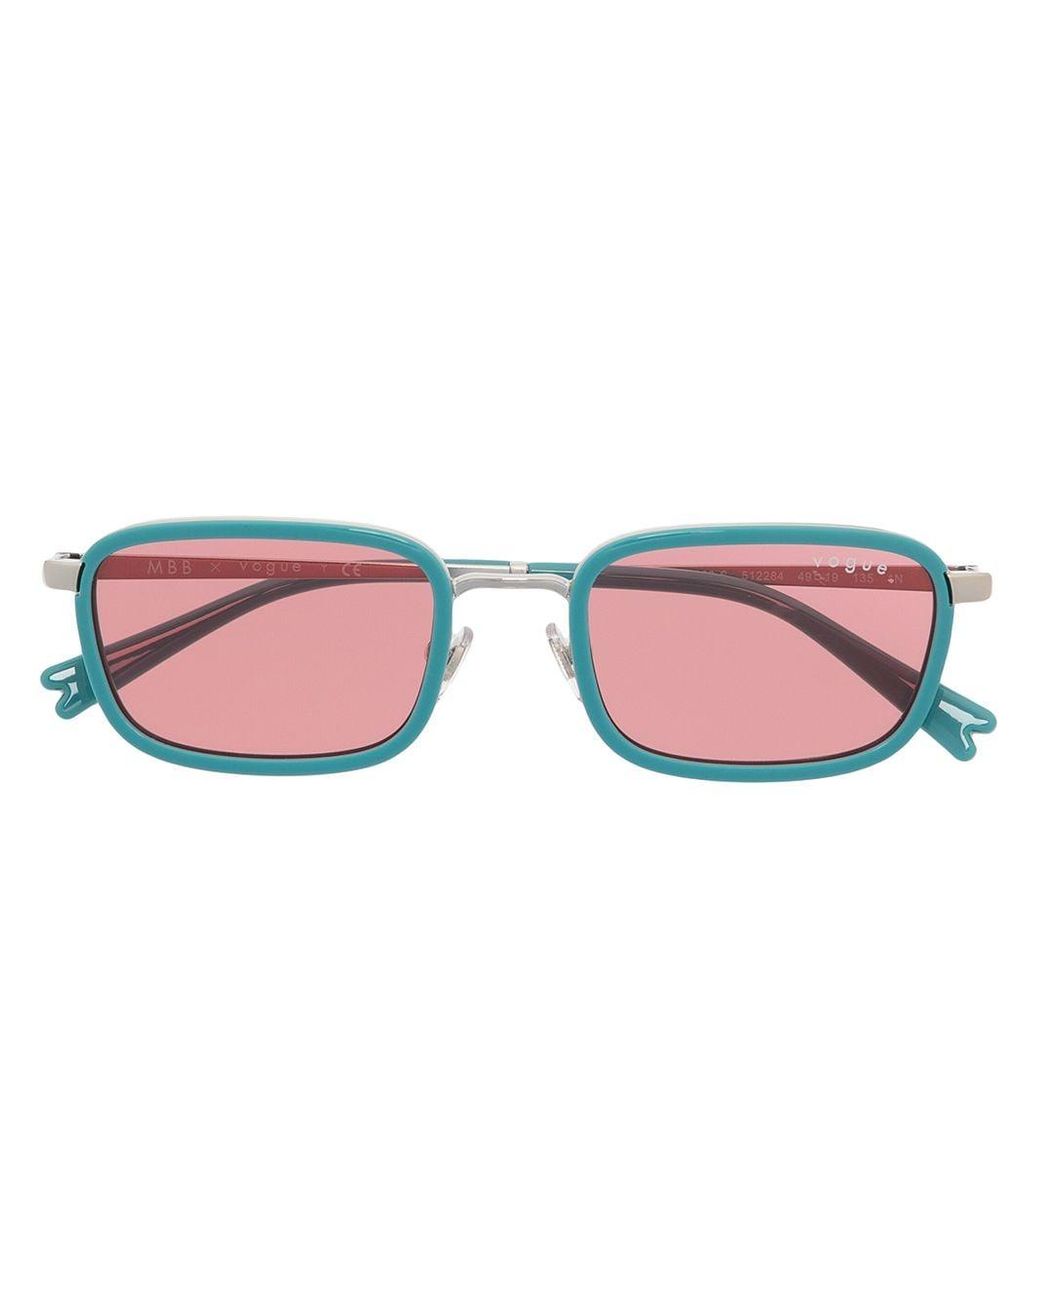 Vogue Eyewear X Millie Bobby Brown Tinted Sunglasses in Blue | Lyst